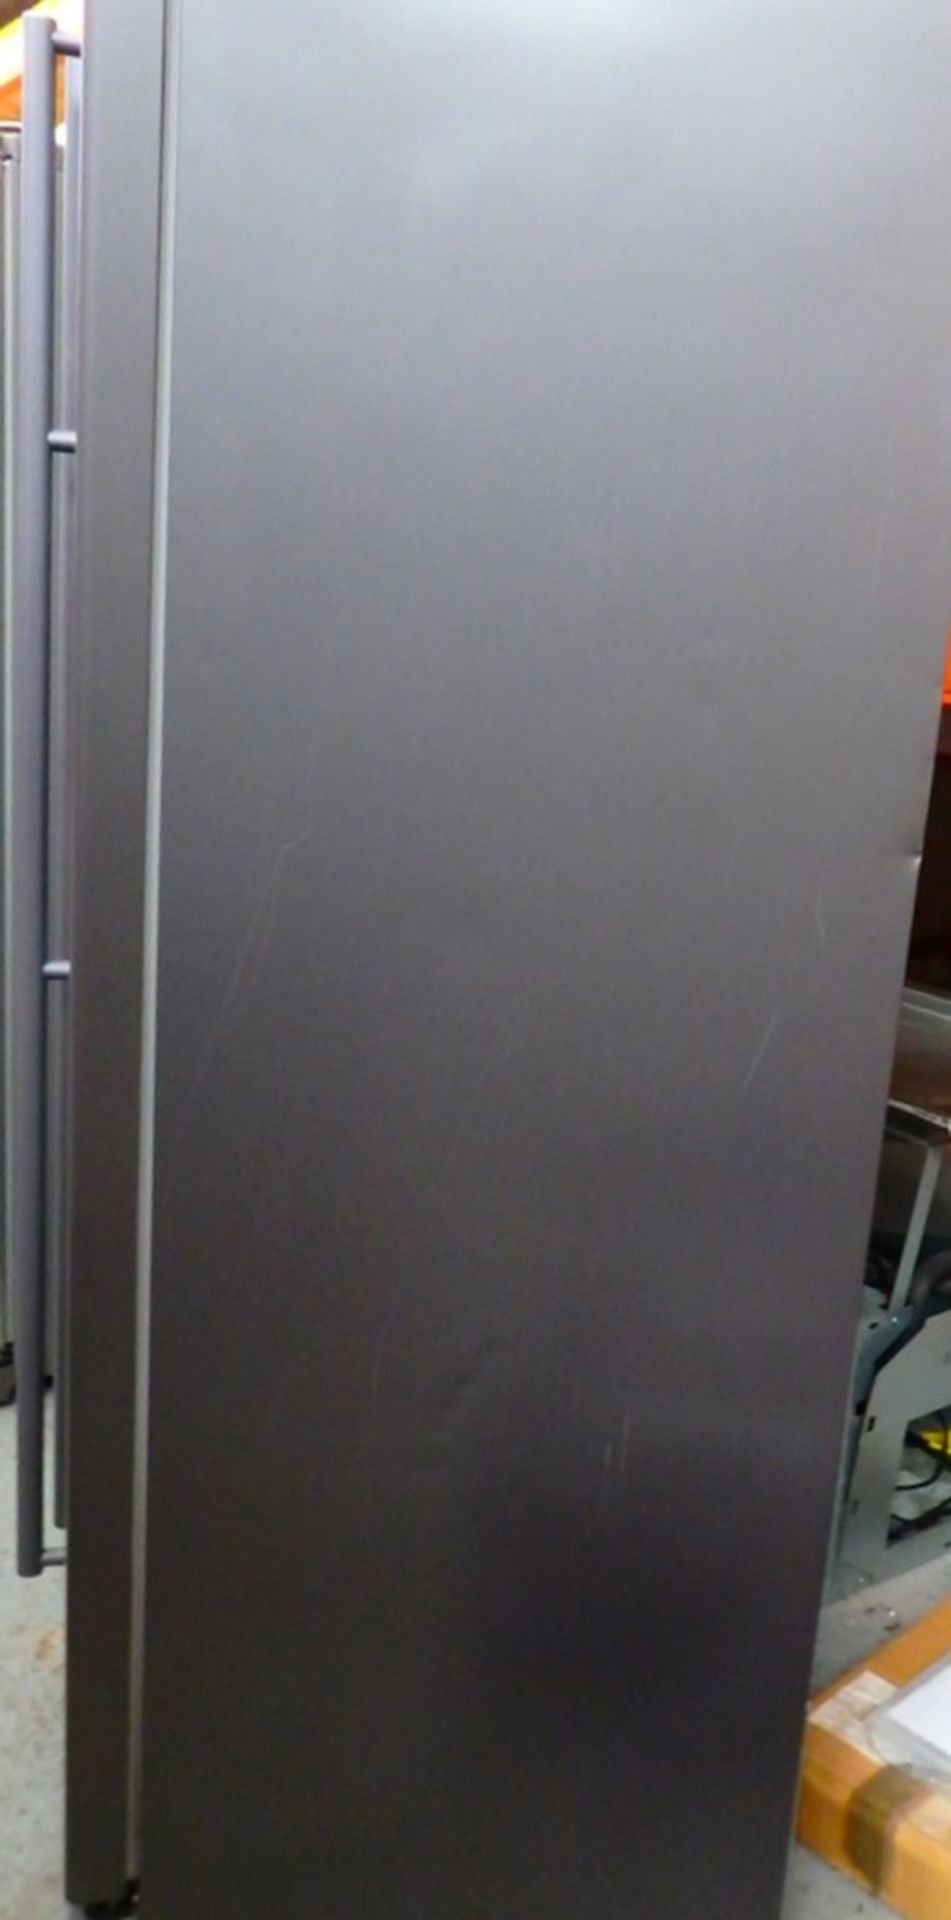 1 x Samsung American-Style (Side By Side) Fridge / Freezer RSA1WTMH - Dimensions: W91 x H178 x D73cm - Image 16 of 20